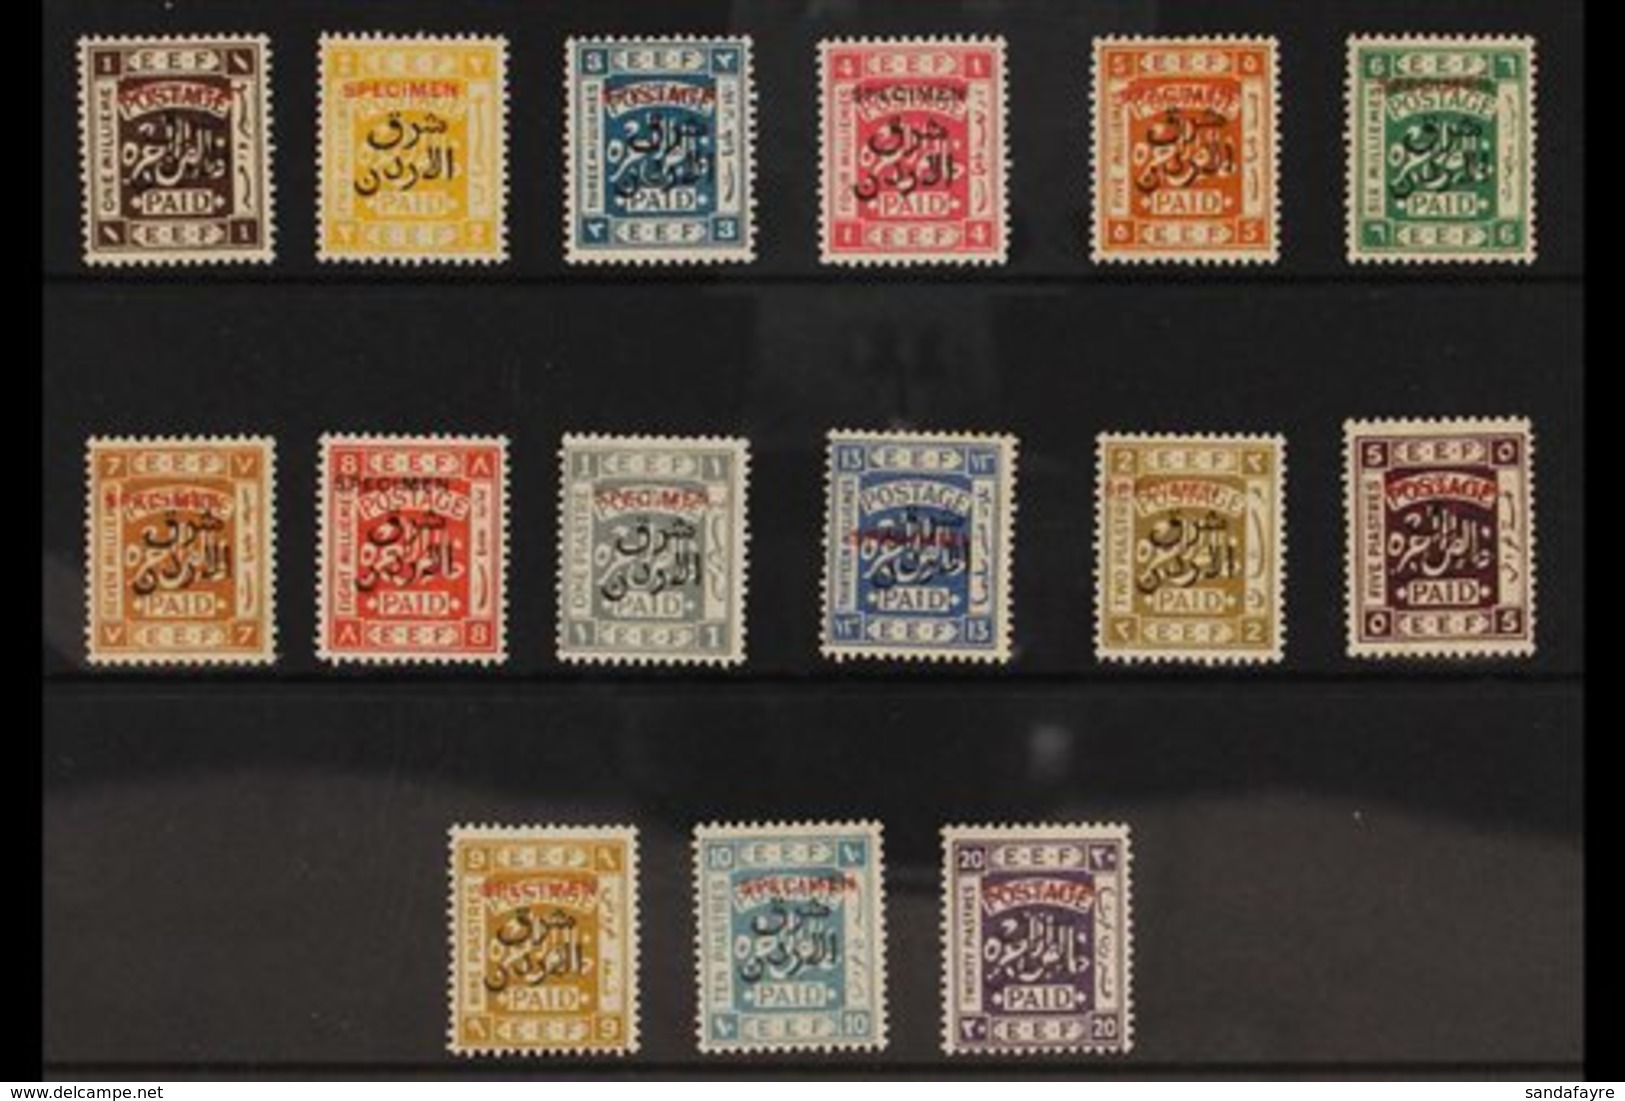 1925-26 "East Of The Jordan" Overprints On Palestine Overprinted "SPECIMEN" Complete Set, SG 143s/57s, Fine Mint, Fresh  - Jordanien